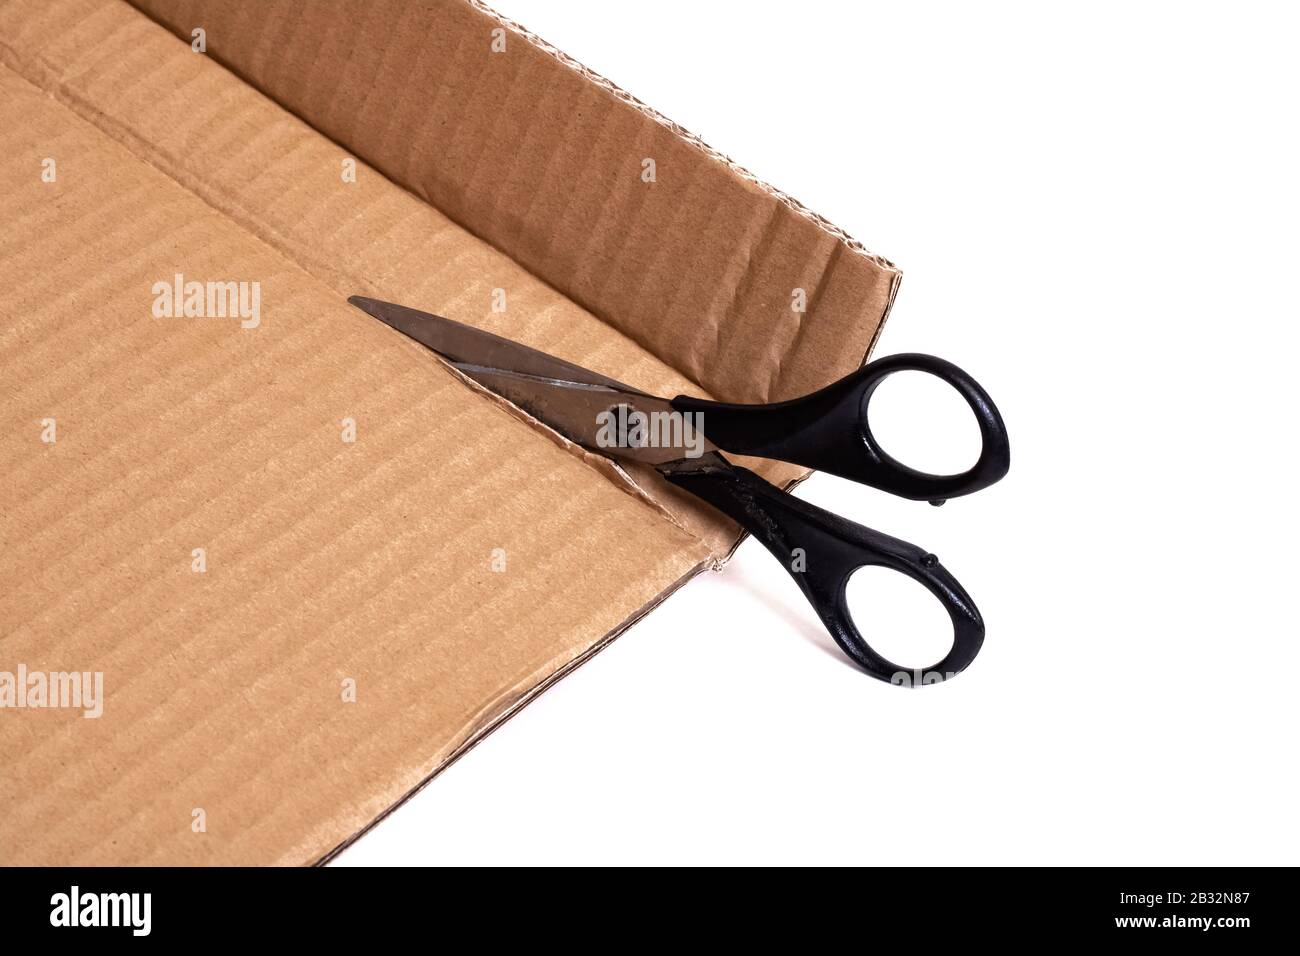 Cutting Tools and Techniques, Cardboard Fundamentals